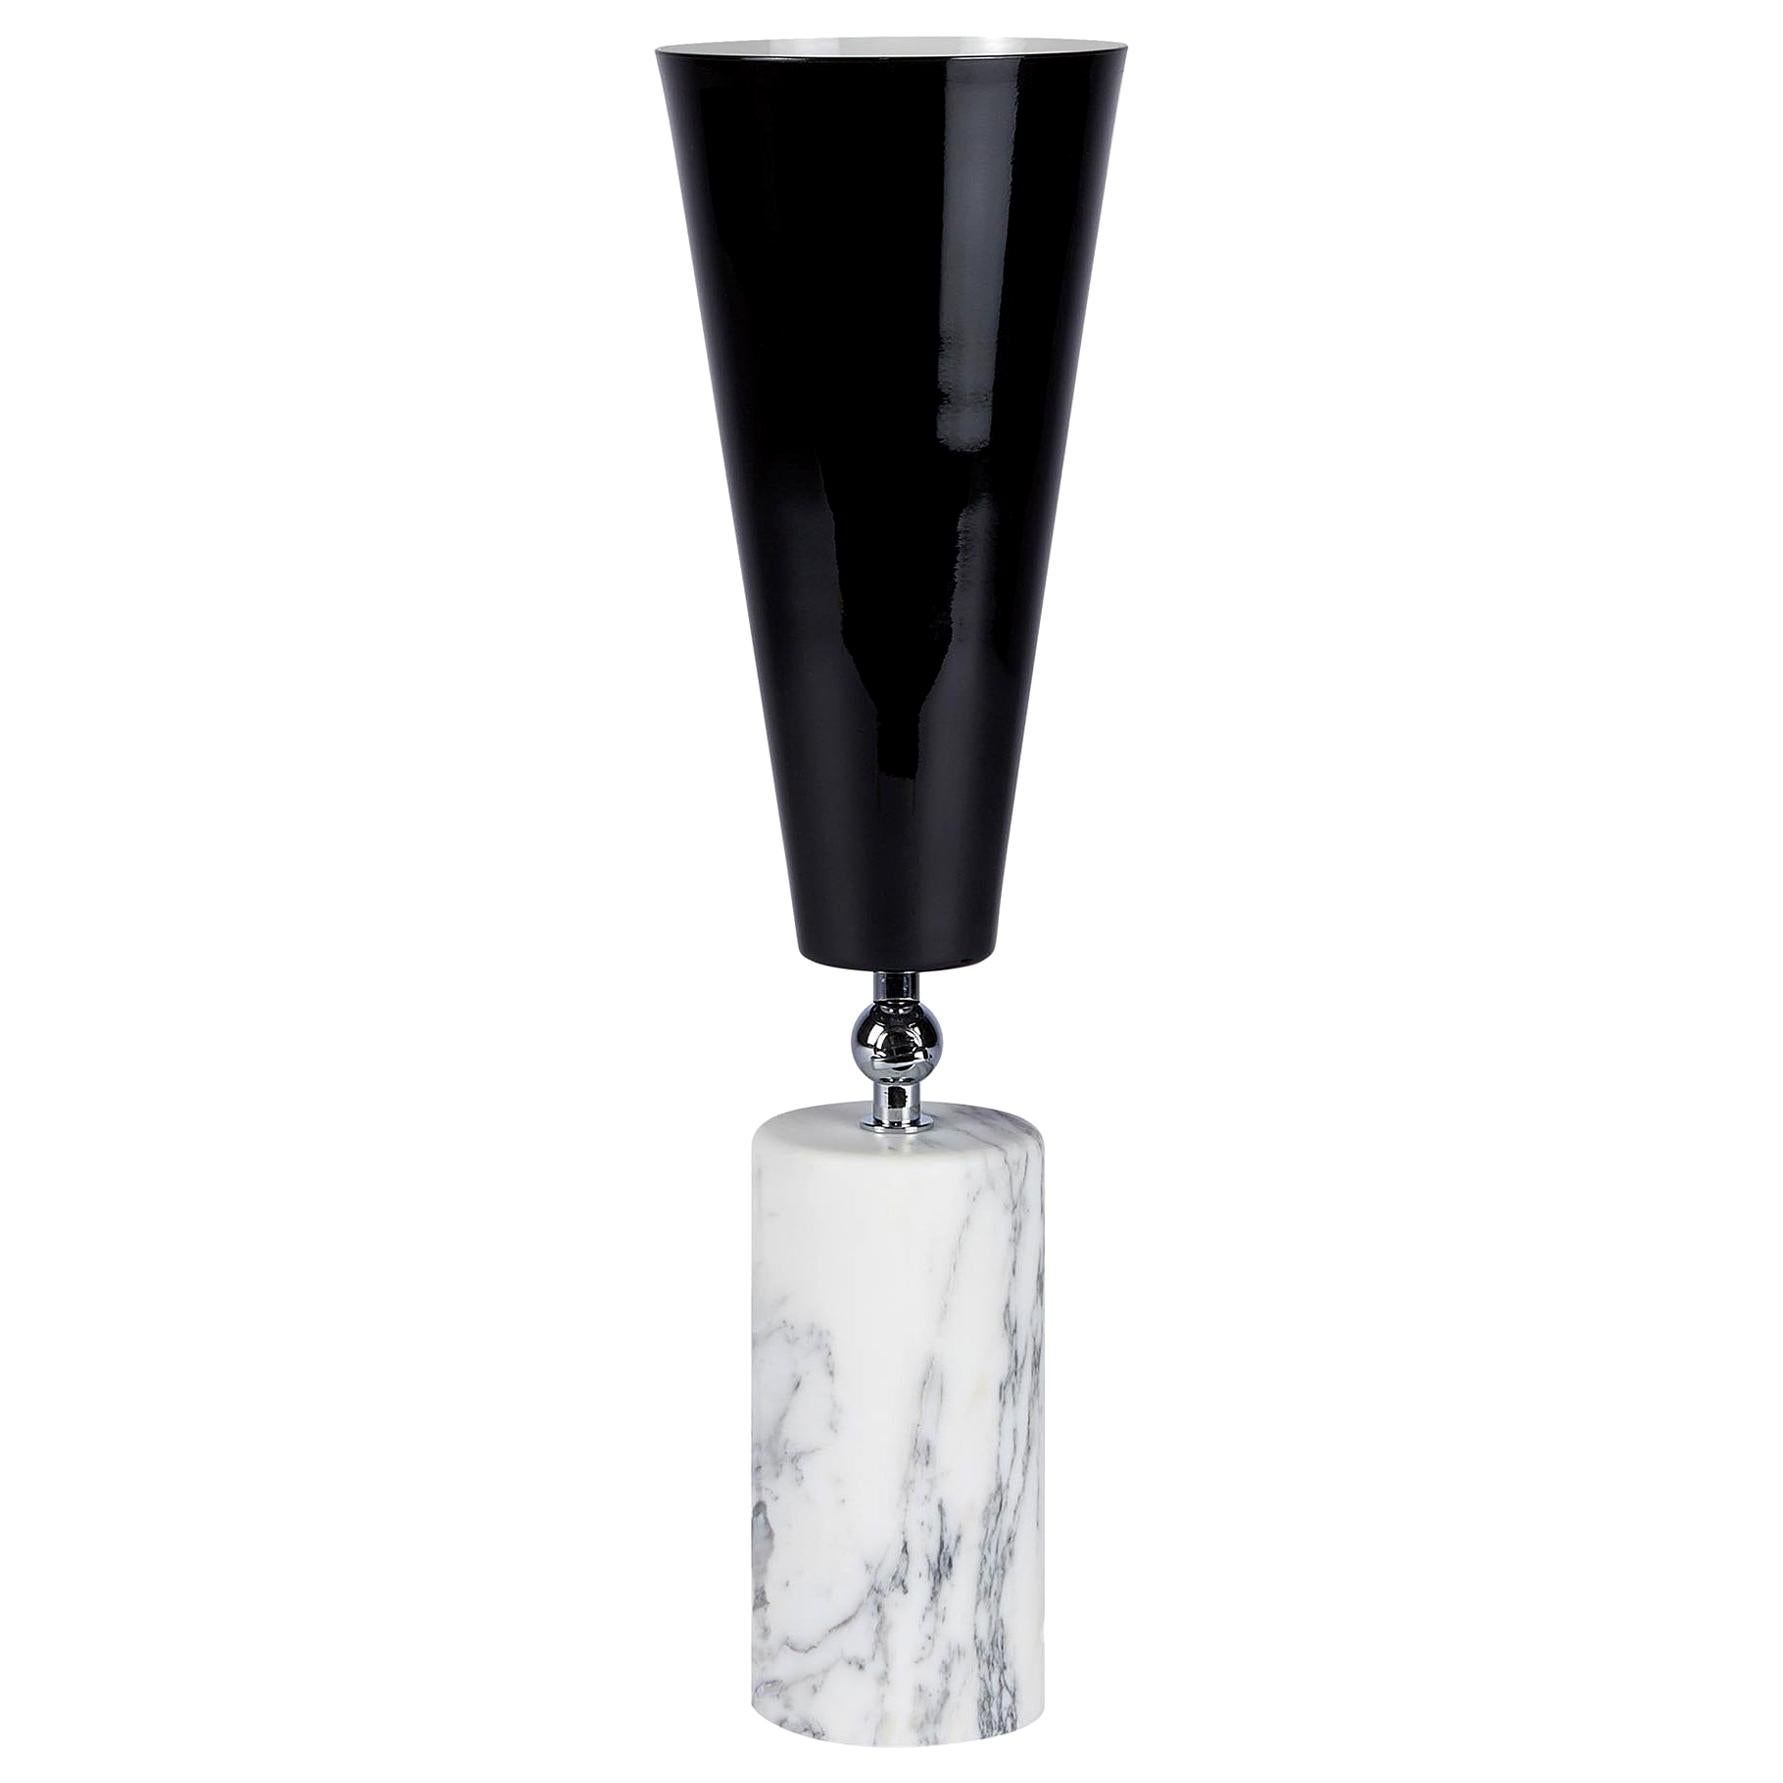 Tato Italia 'Vox' Table Lamp in White Carrara Marble, Chrome, and Glossy Black